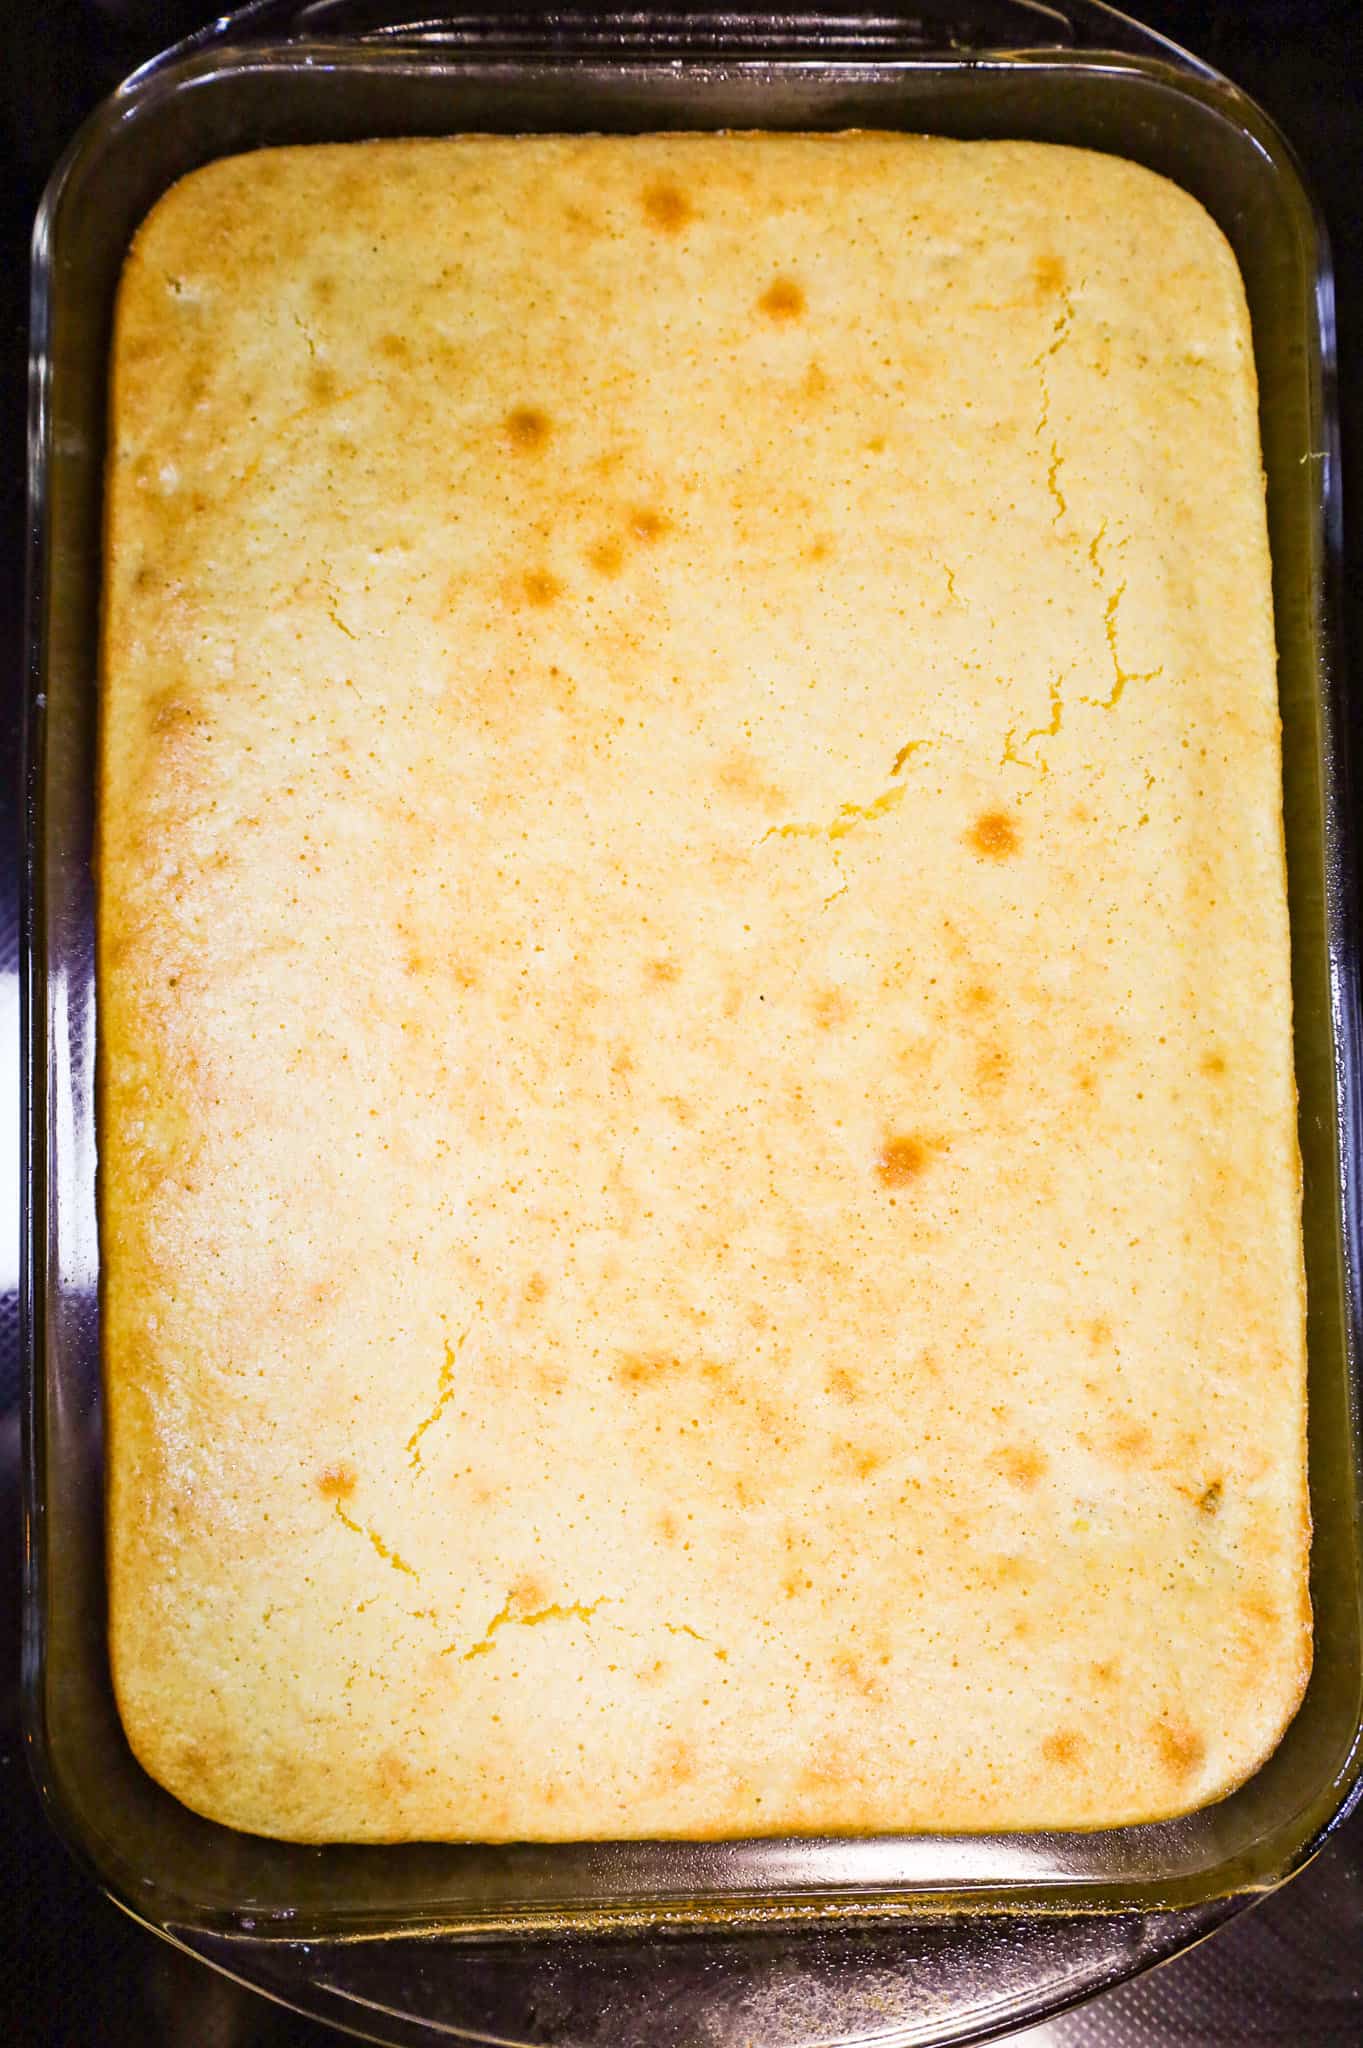 cornbread casserole after baking